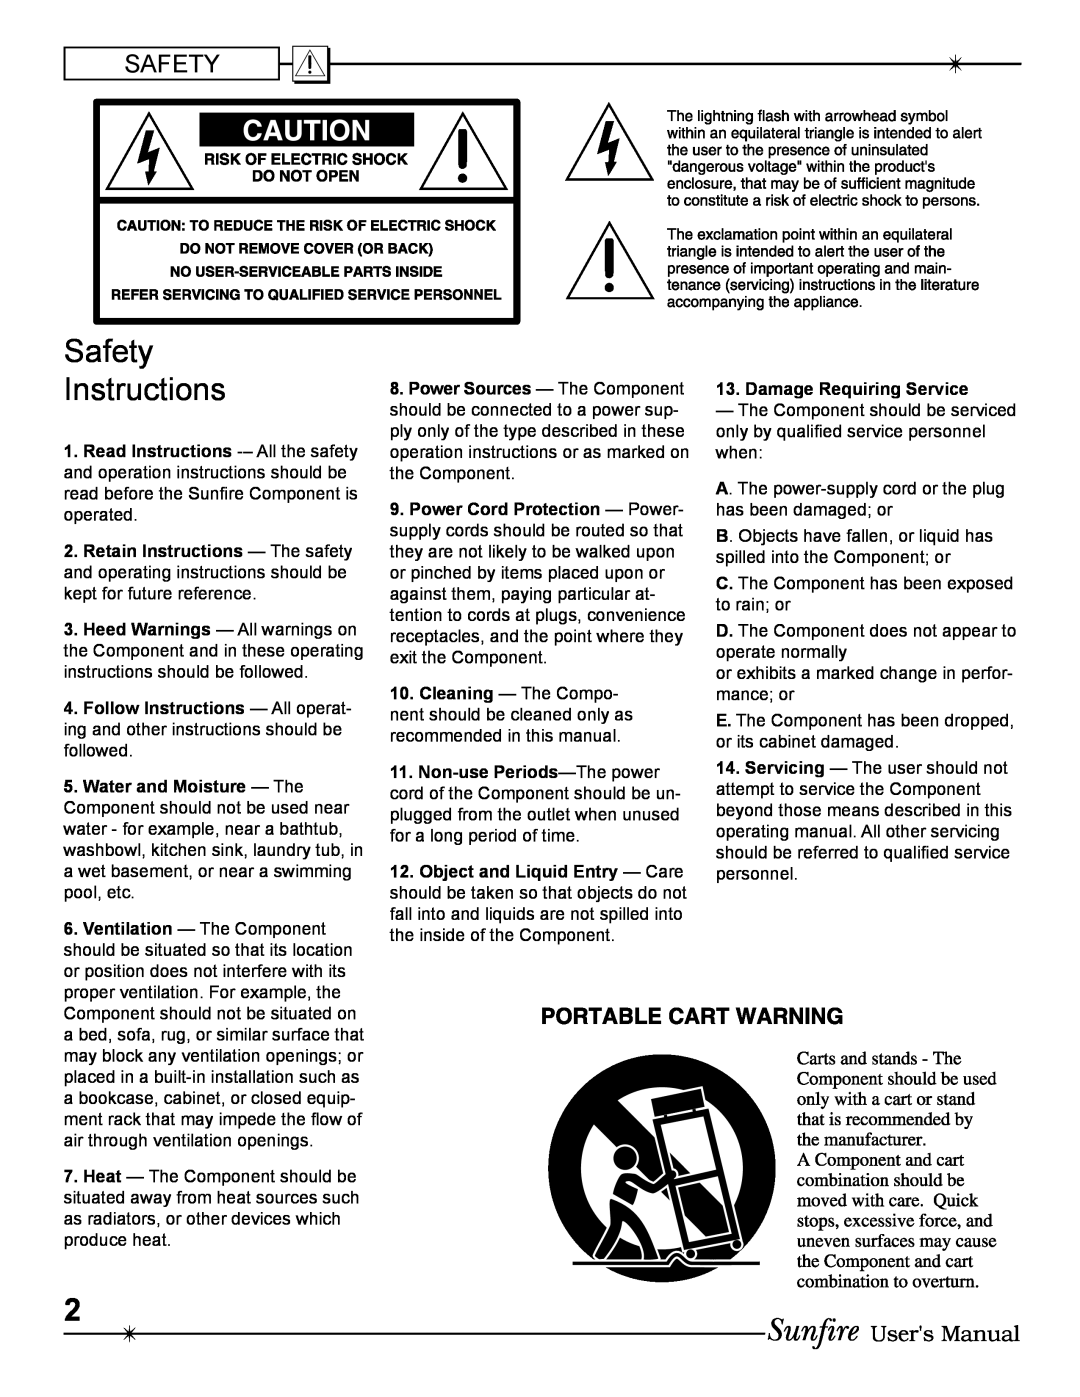 Sunfire Radio manual Safety, Instructions 